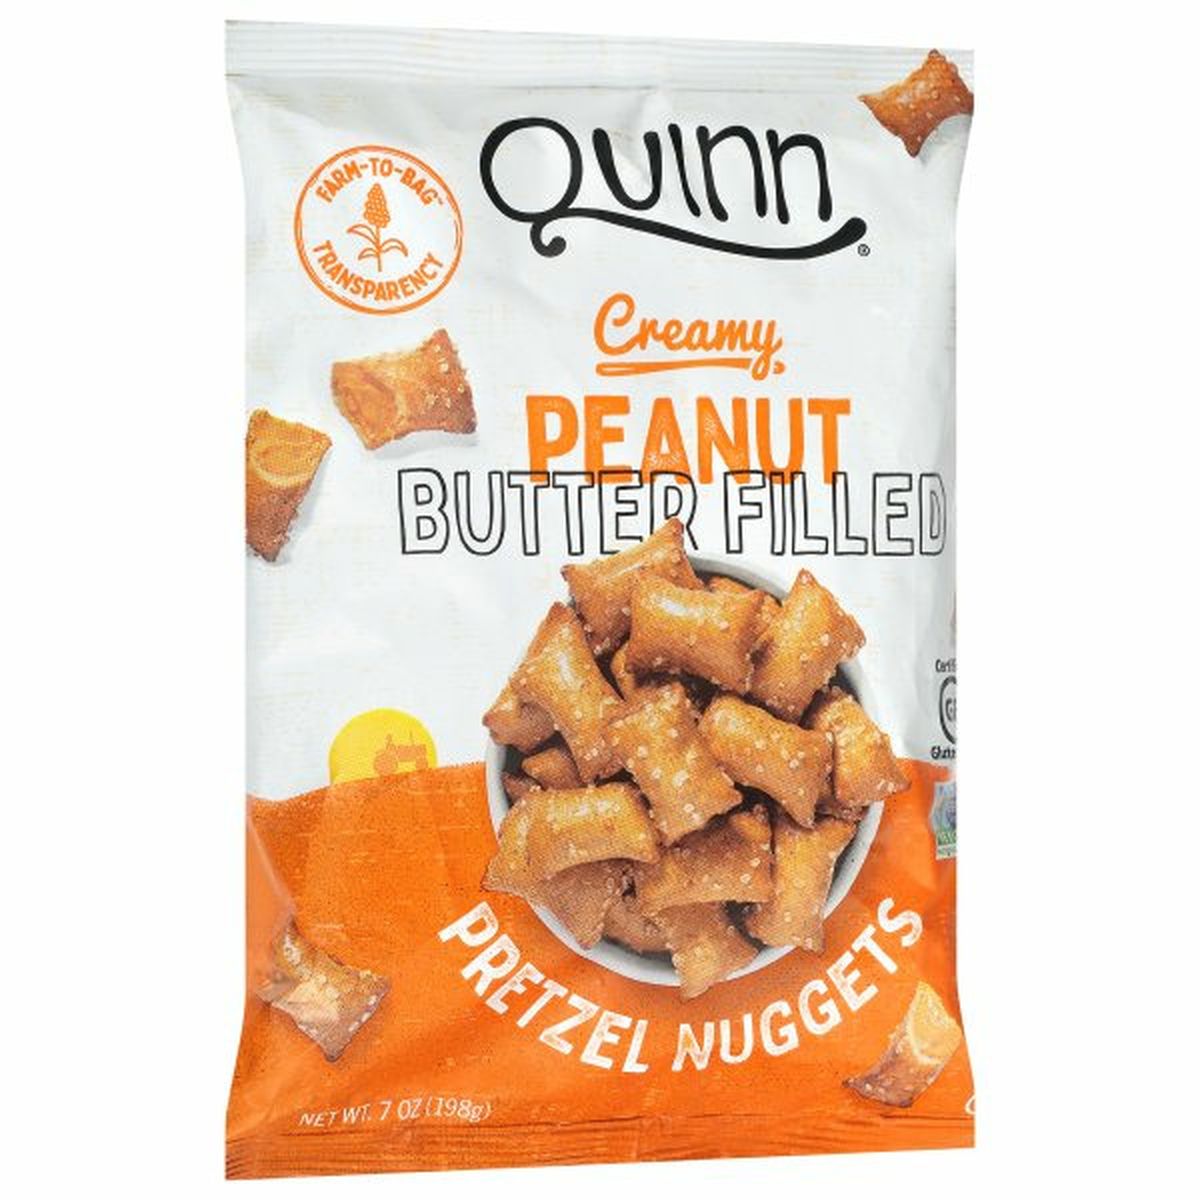 Calories in Quinn Pretzel Nuggets, Creamy Peanut Butter Filled